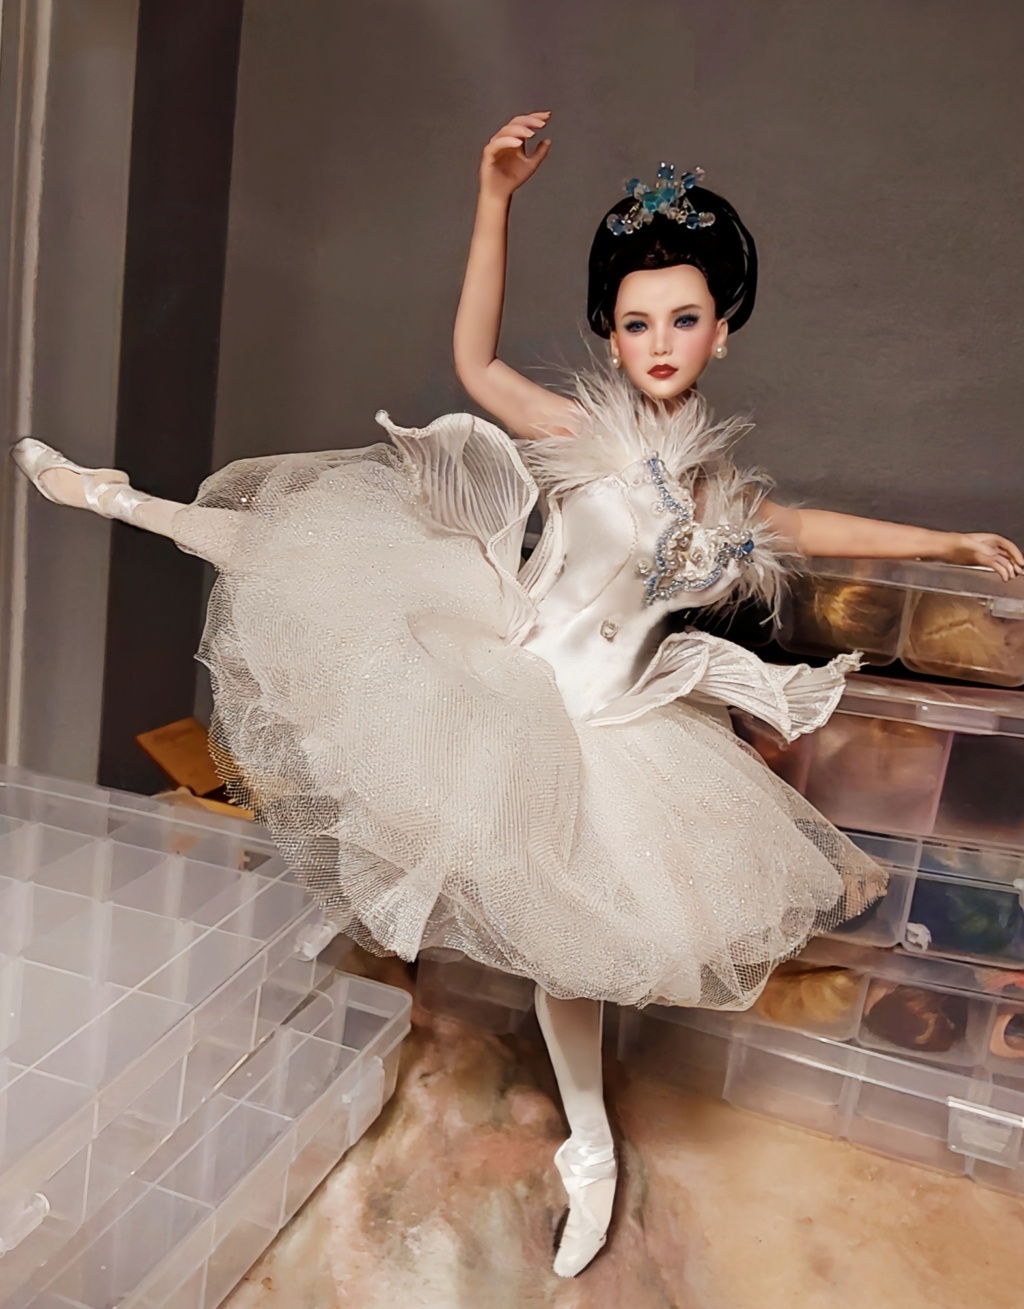 ballet - NEW PRODUCT: SA Toys - Universal high heel foot shape (SA052 A/B) Airbru30